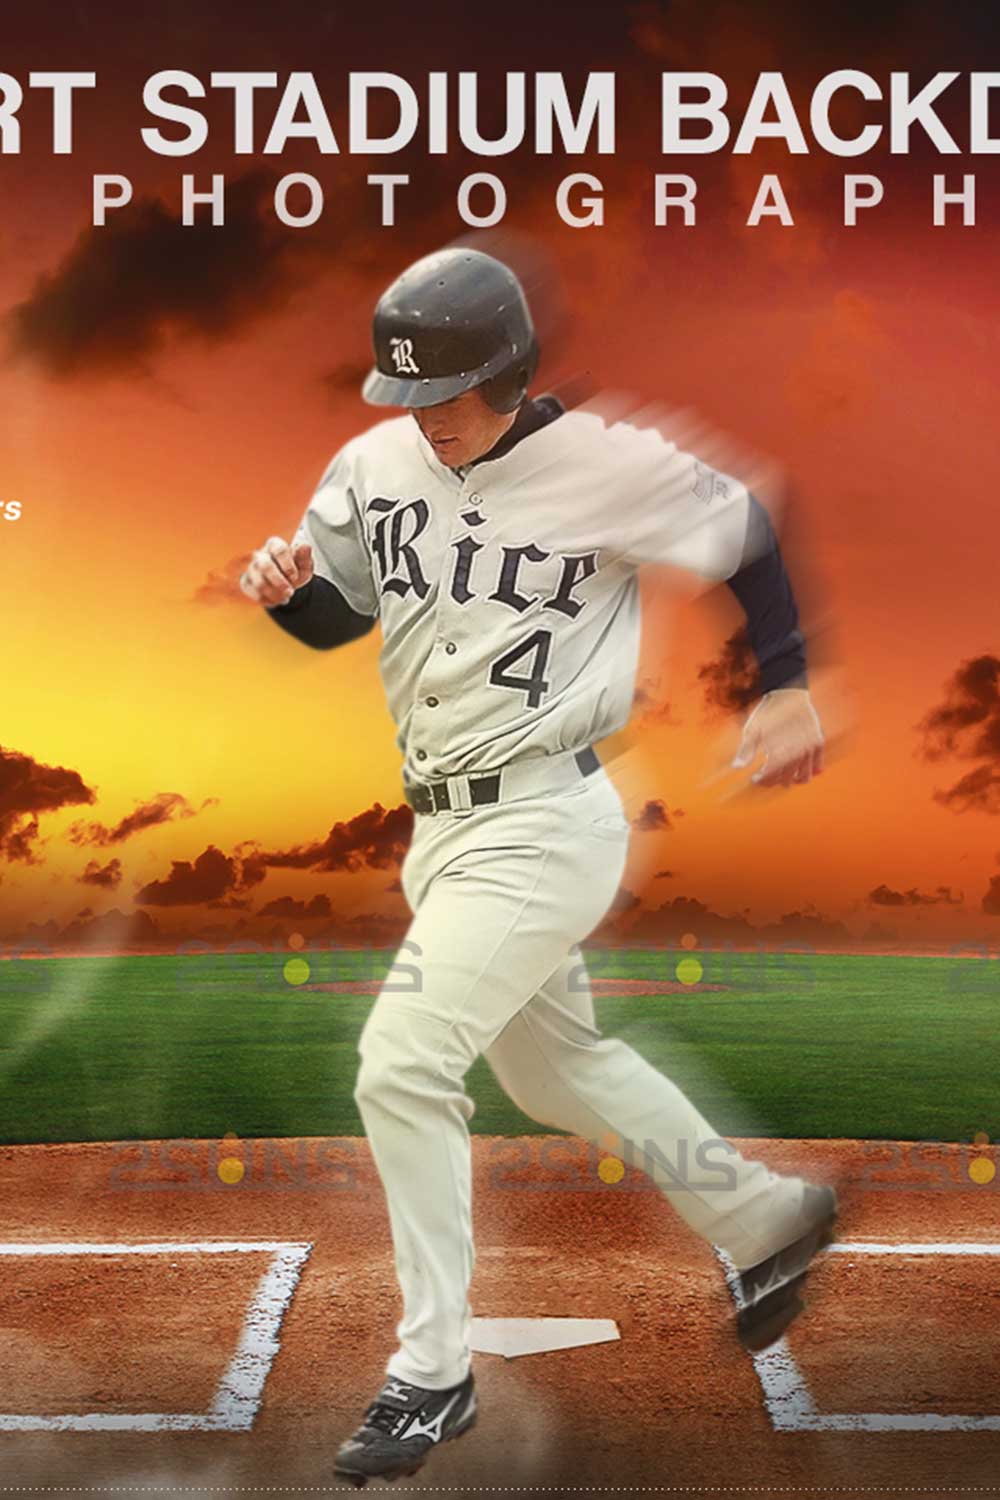 Baseball Modern And Stylish Backdrop Sports Digital Background Pinterest Image.